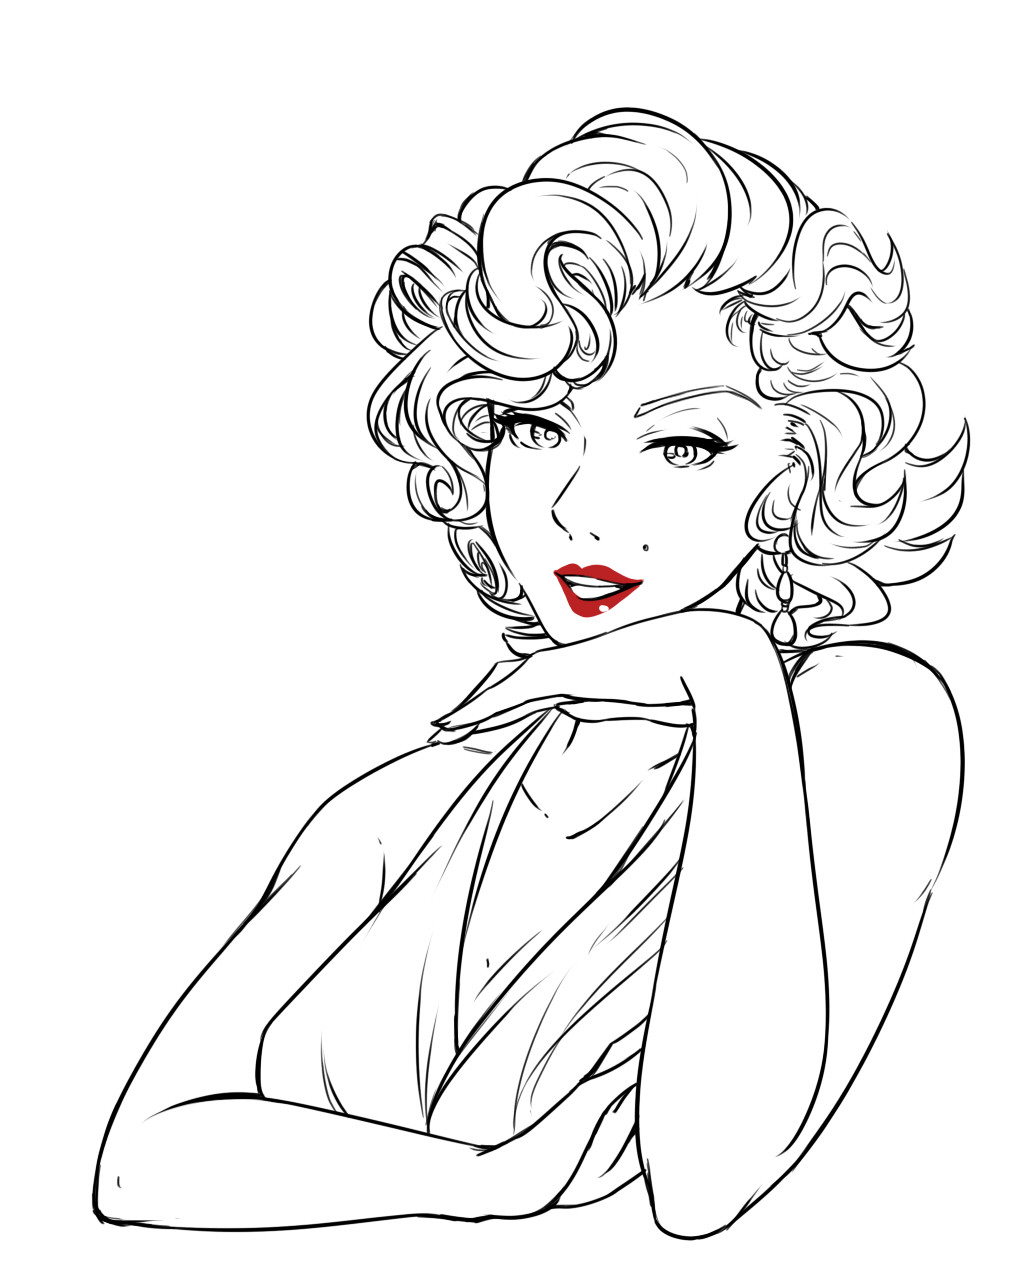 ArtStation - Marilyn Monroe